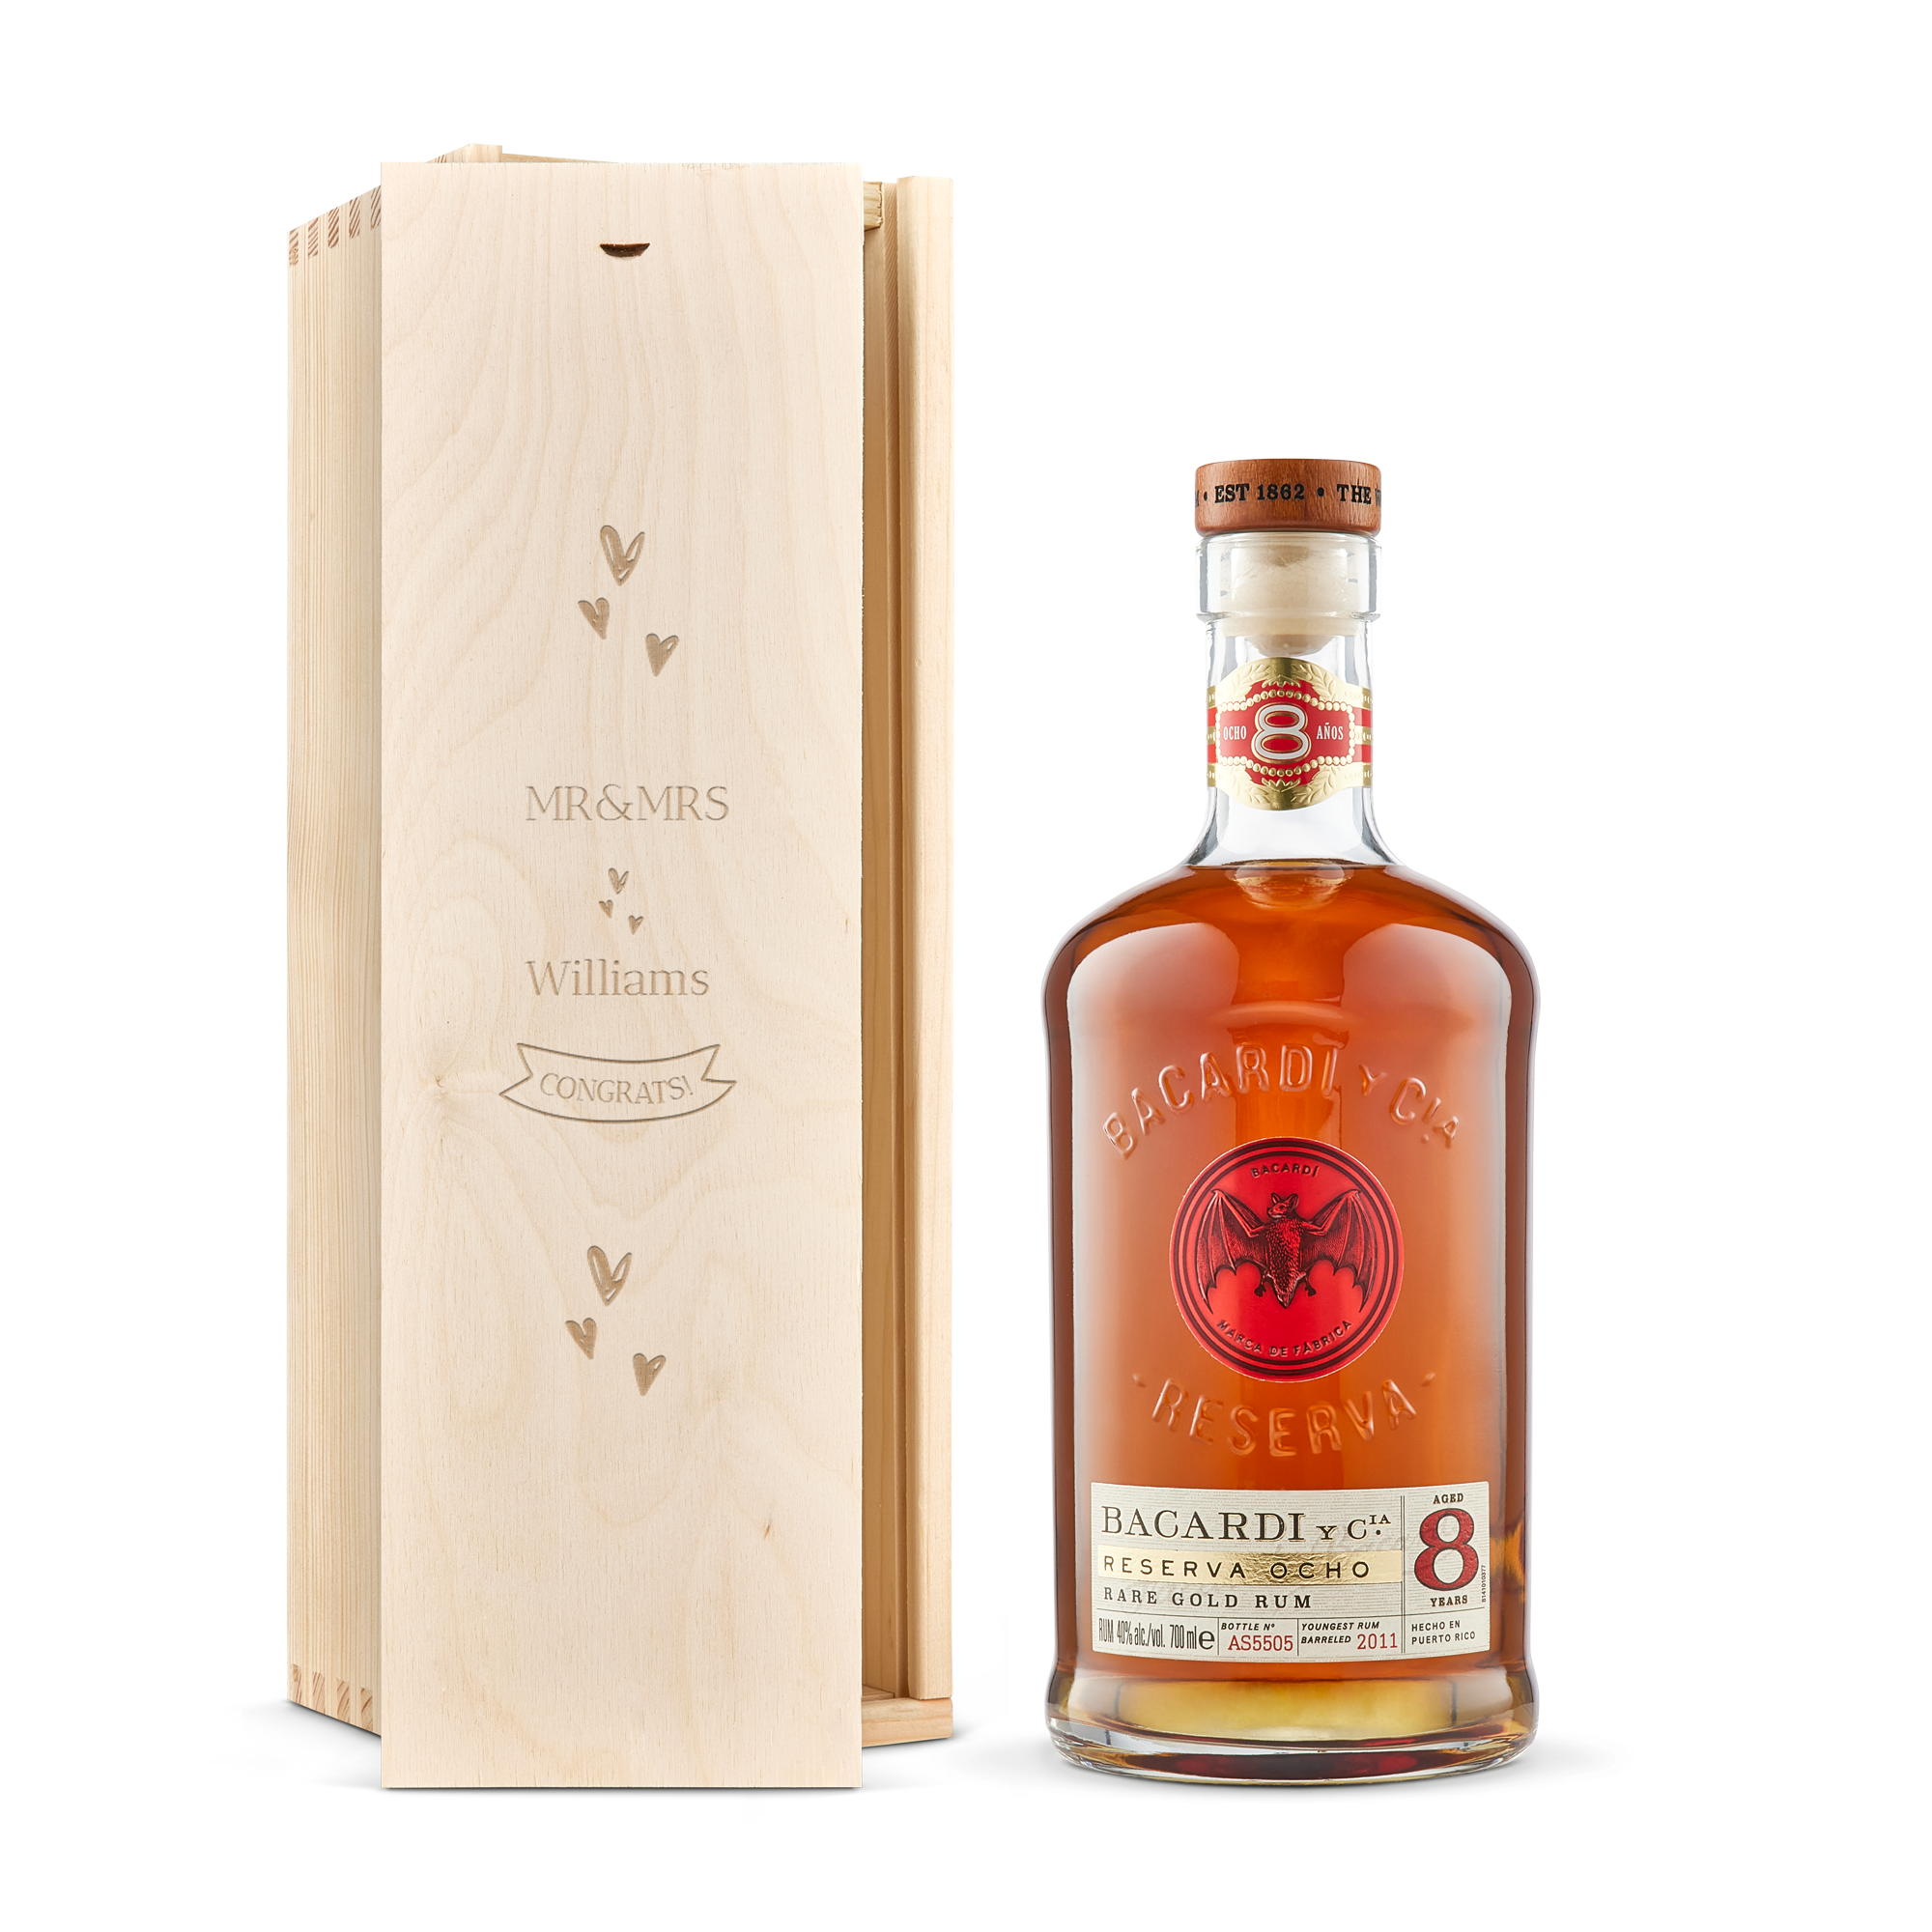 Personalised rum gift - Bacardi - Reserva Ocho - Engraved wooden case